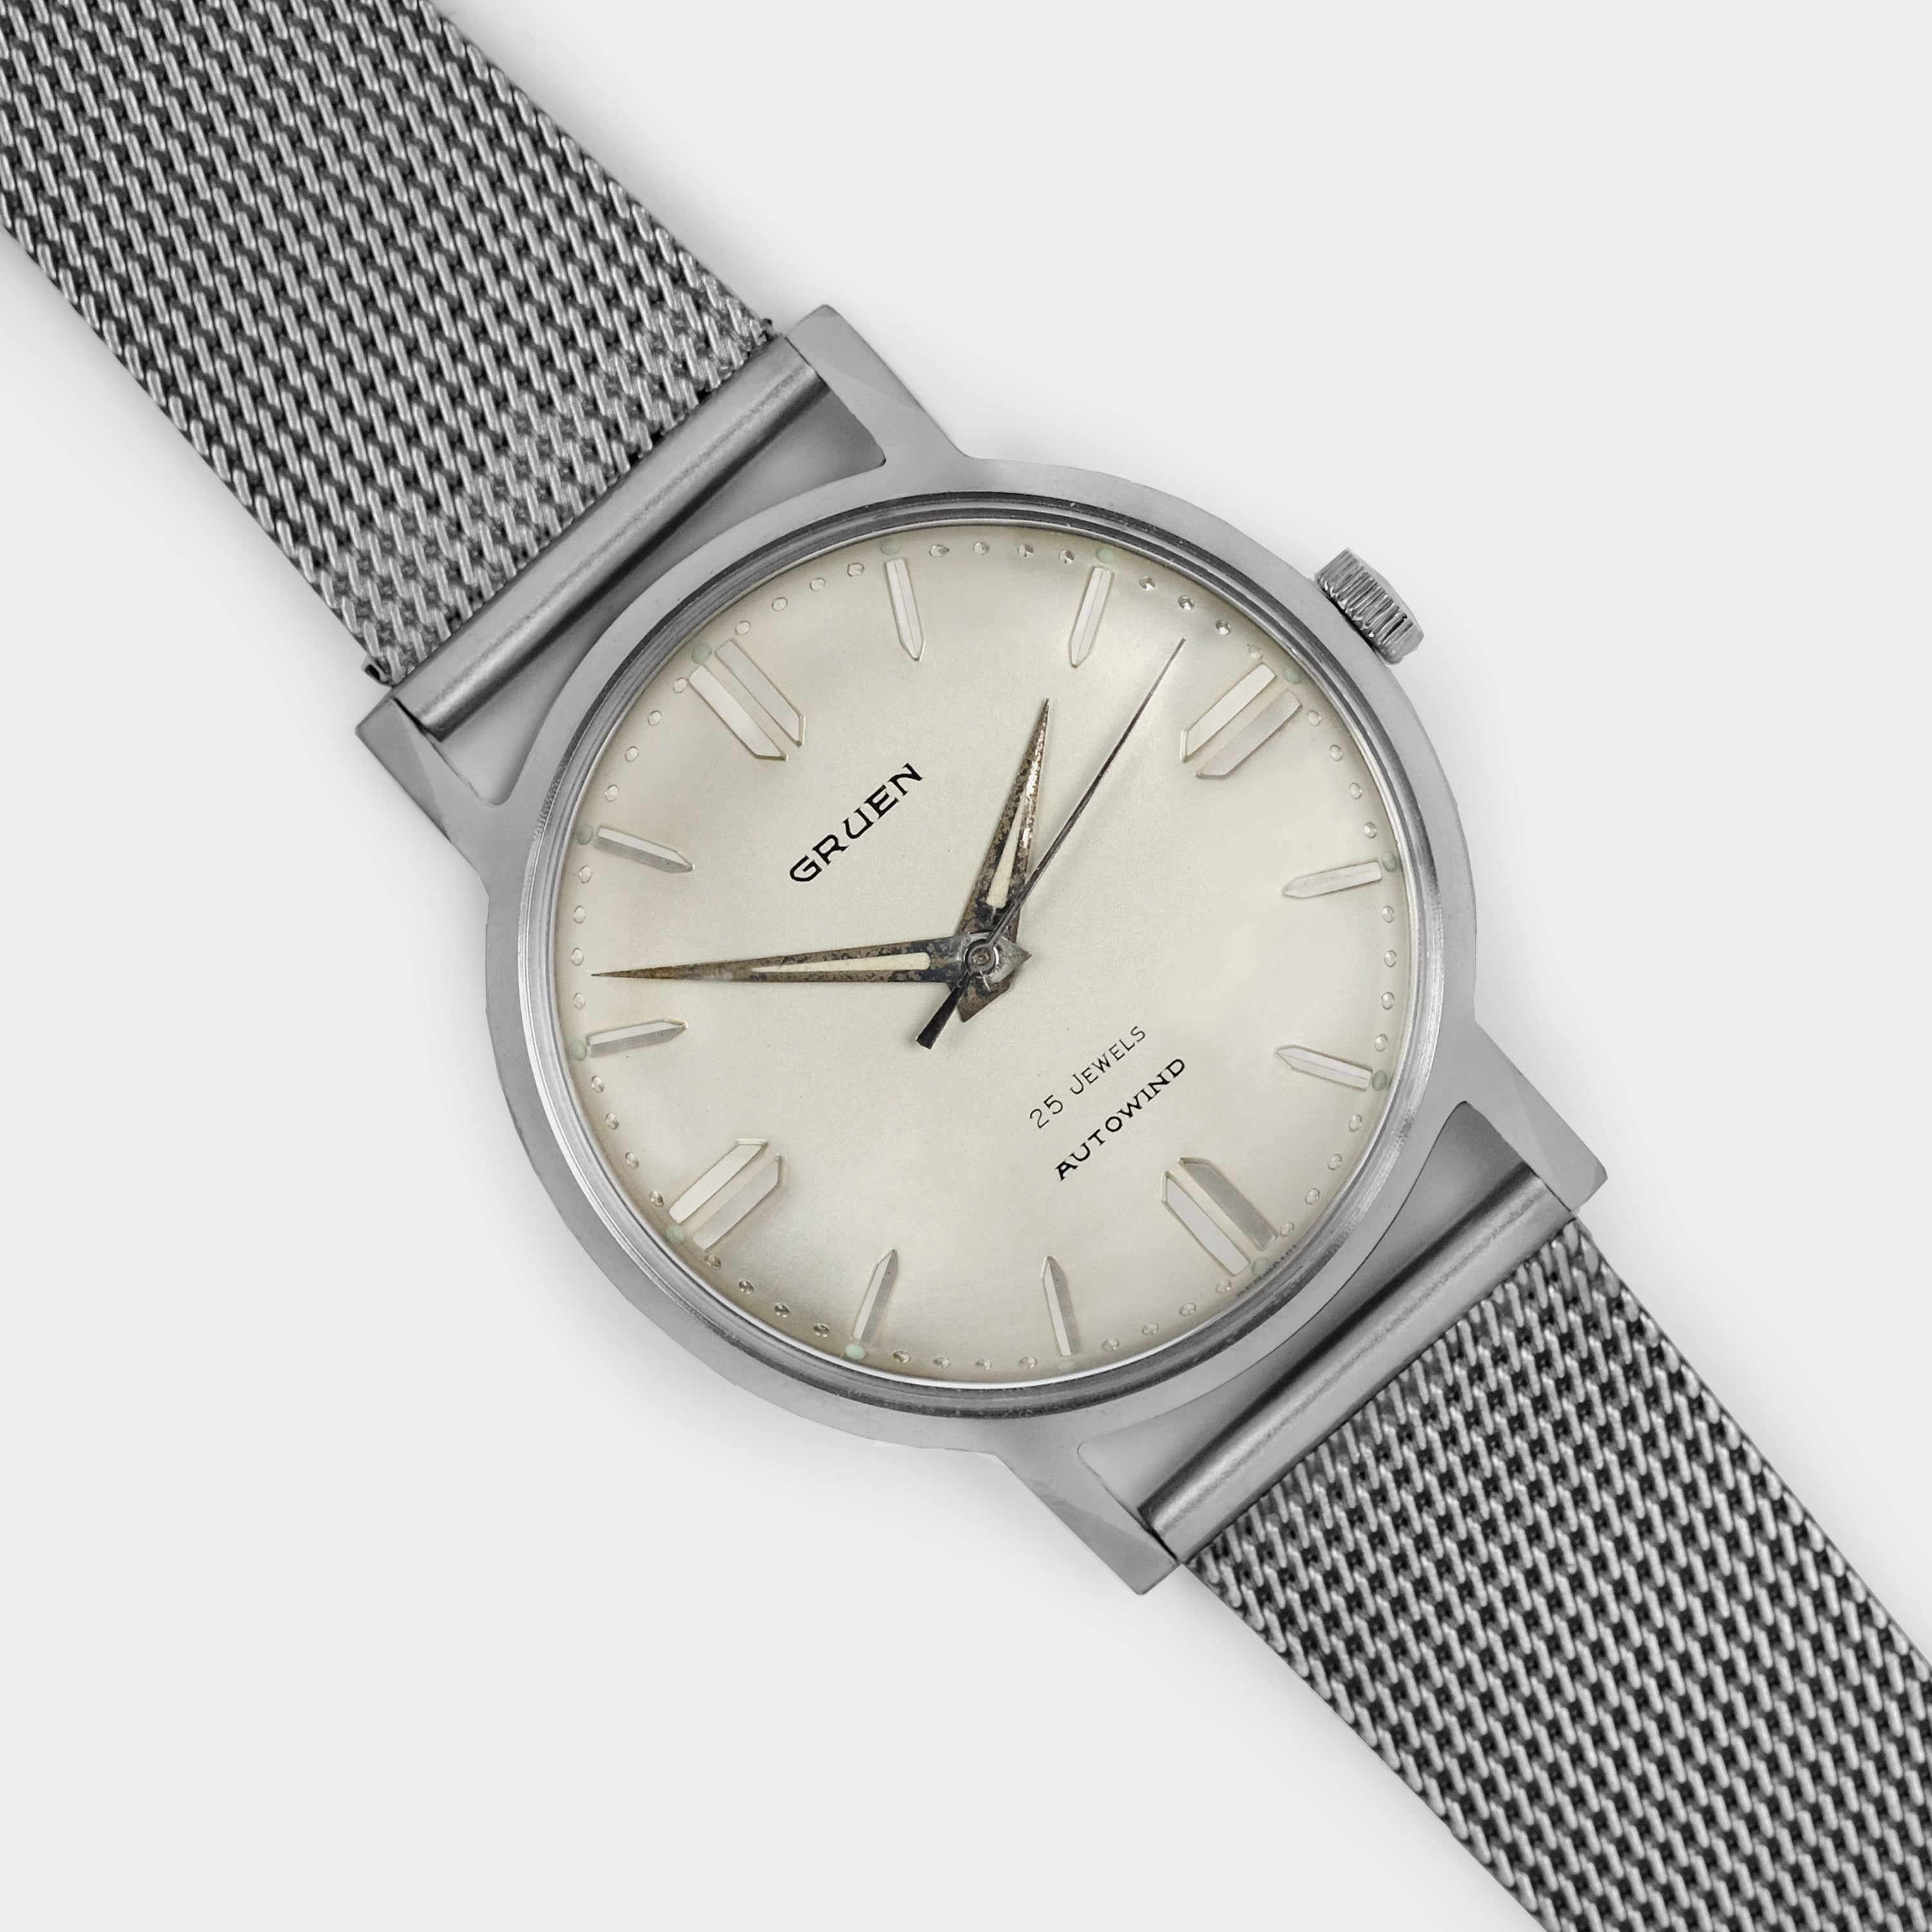 Gruen Autowind (25 Jewels) Wristwatch